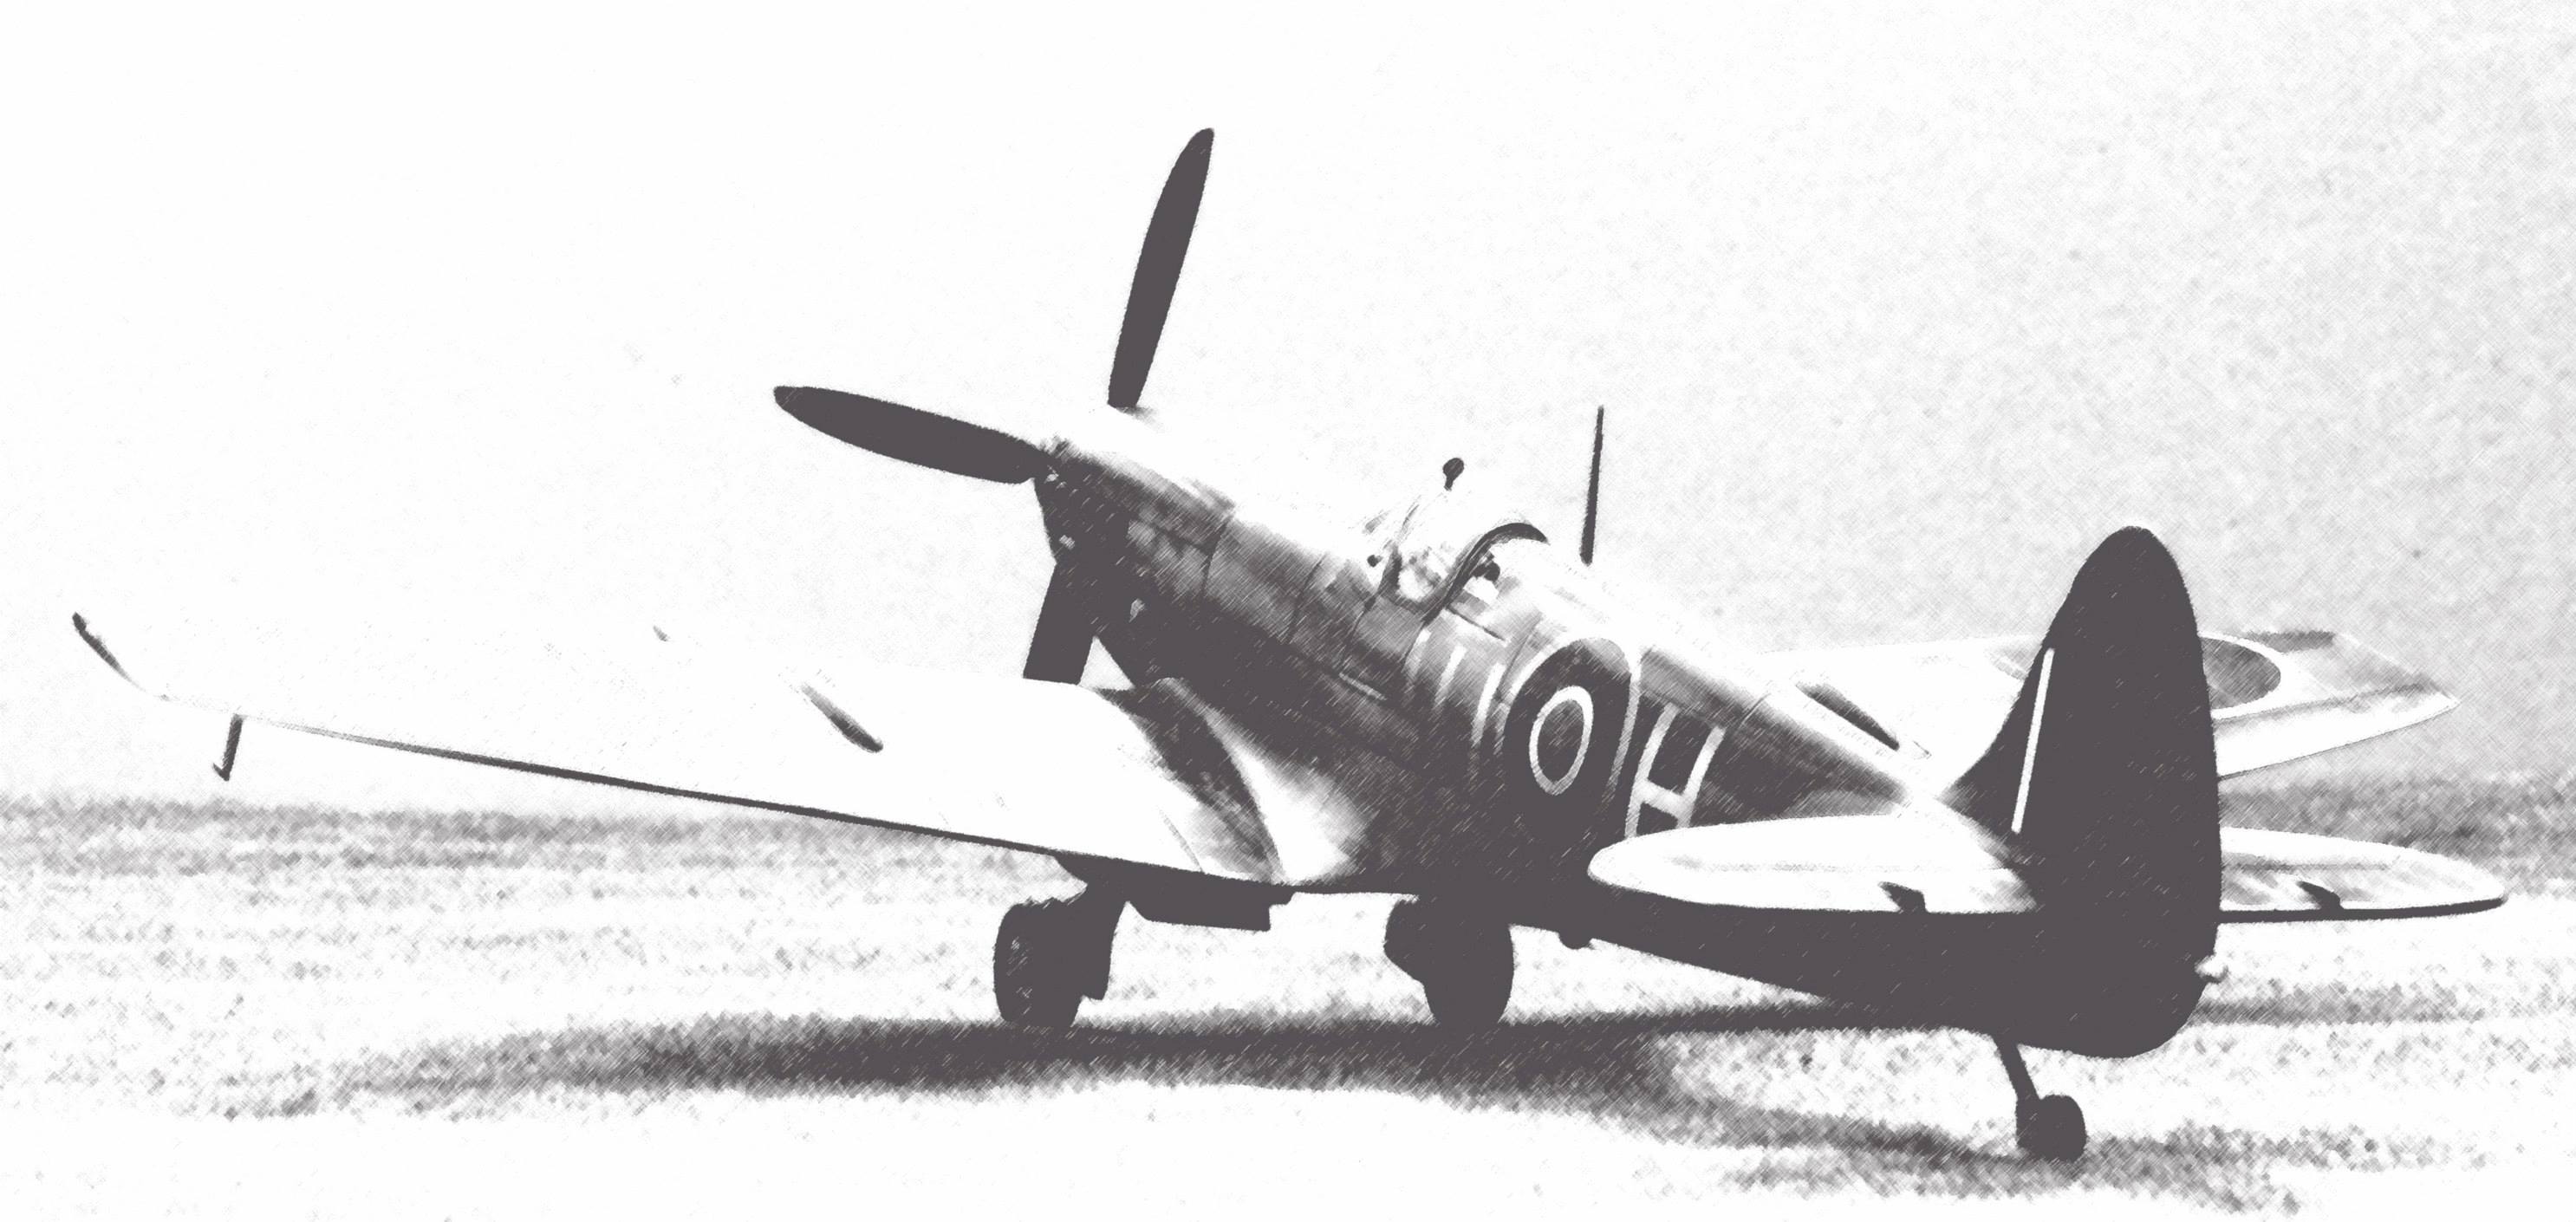 Spitfire LF.Mk.XVIe, SM309/AU-H, “Panama Bound”. Airfix kit in 1/48th scale.